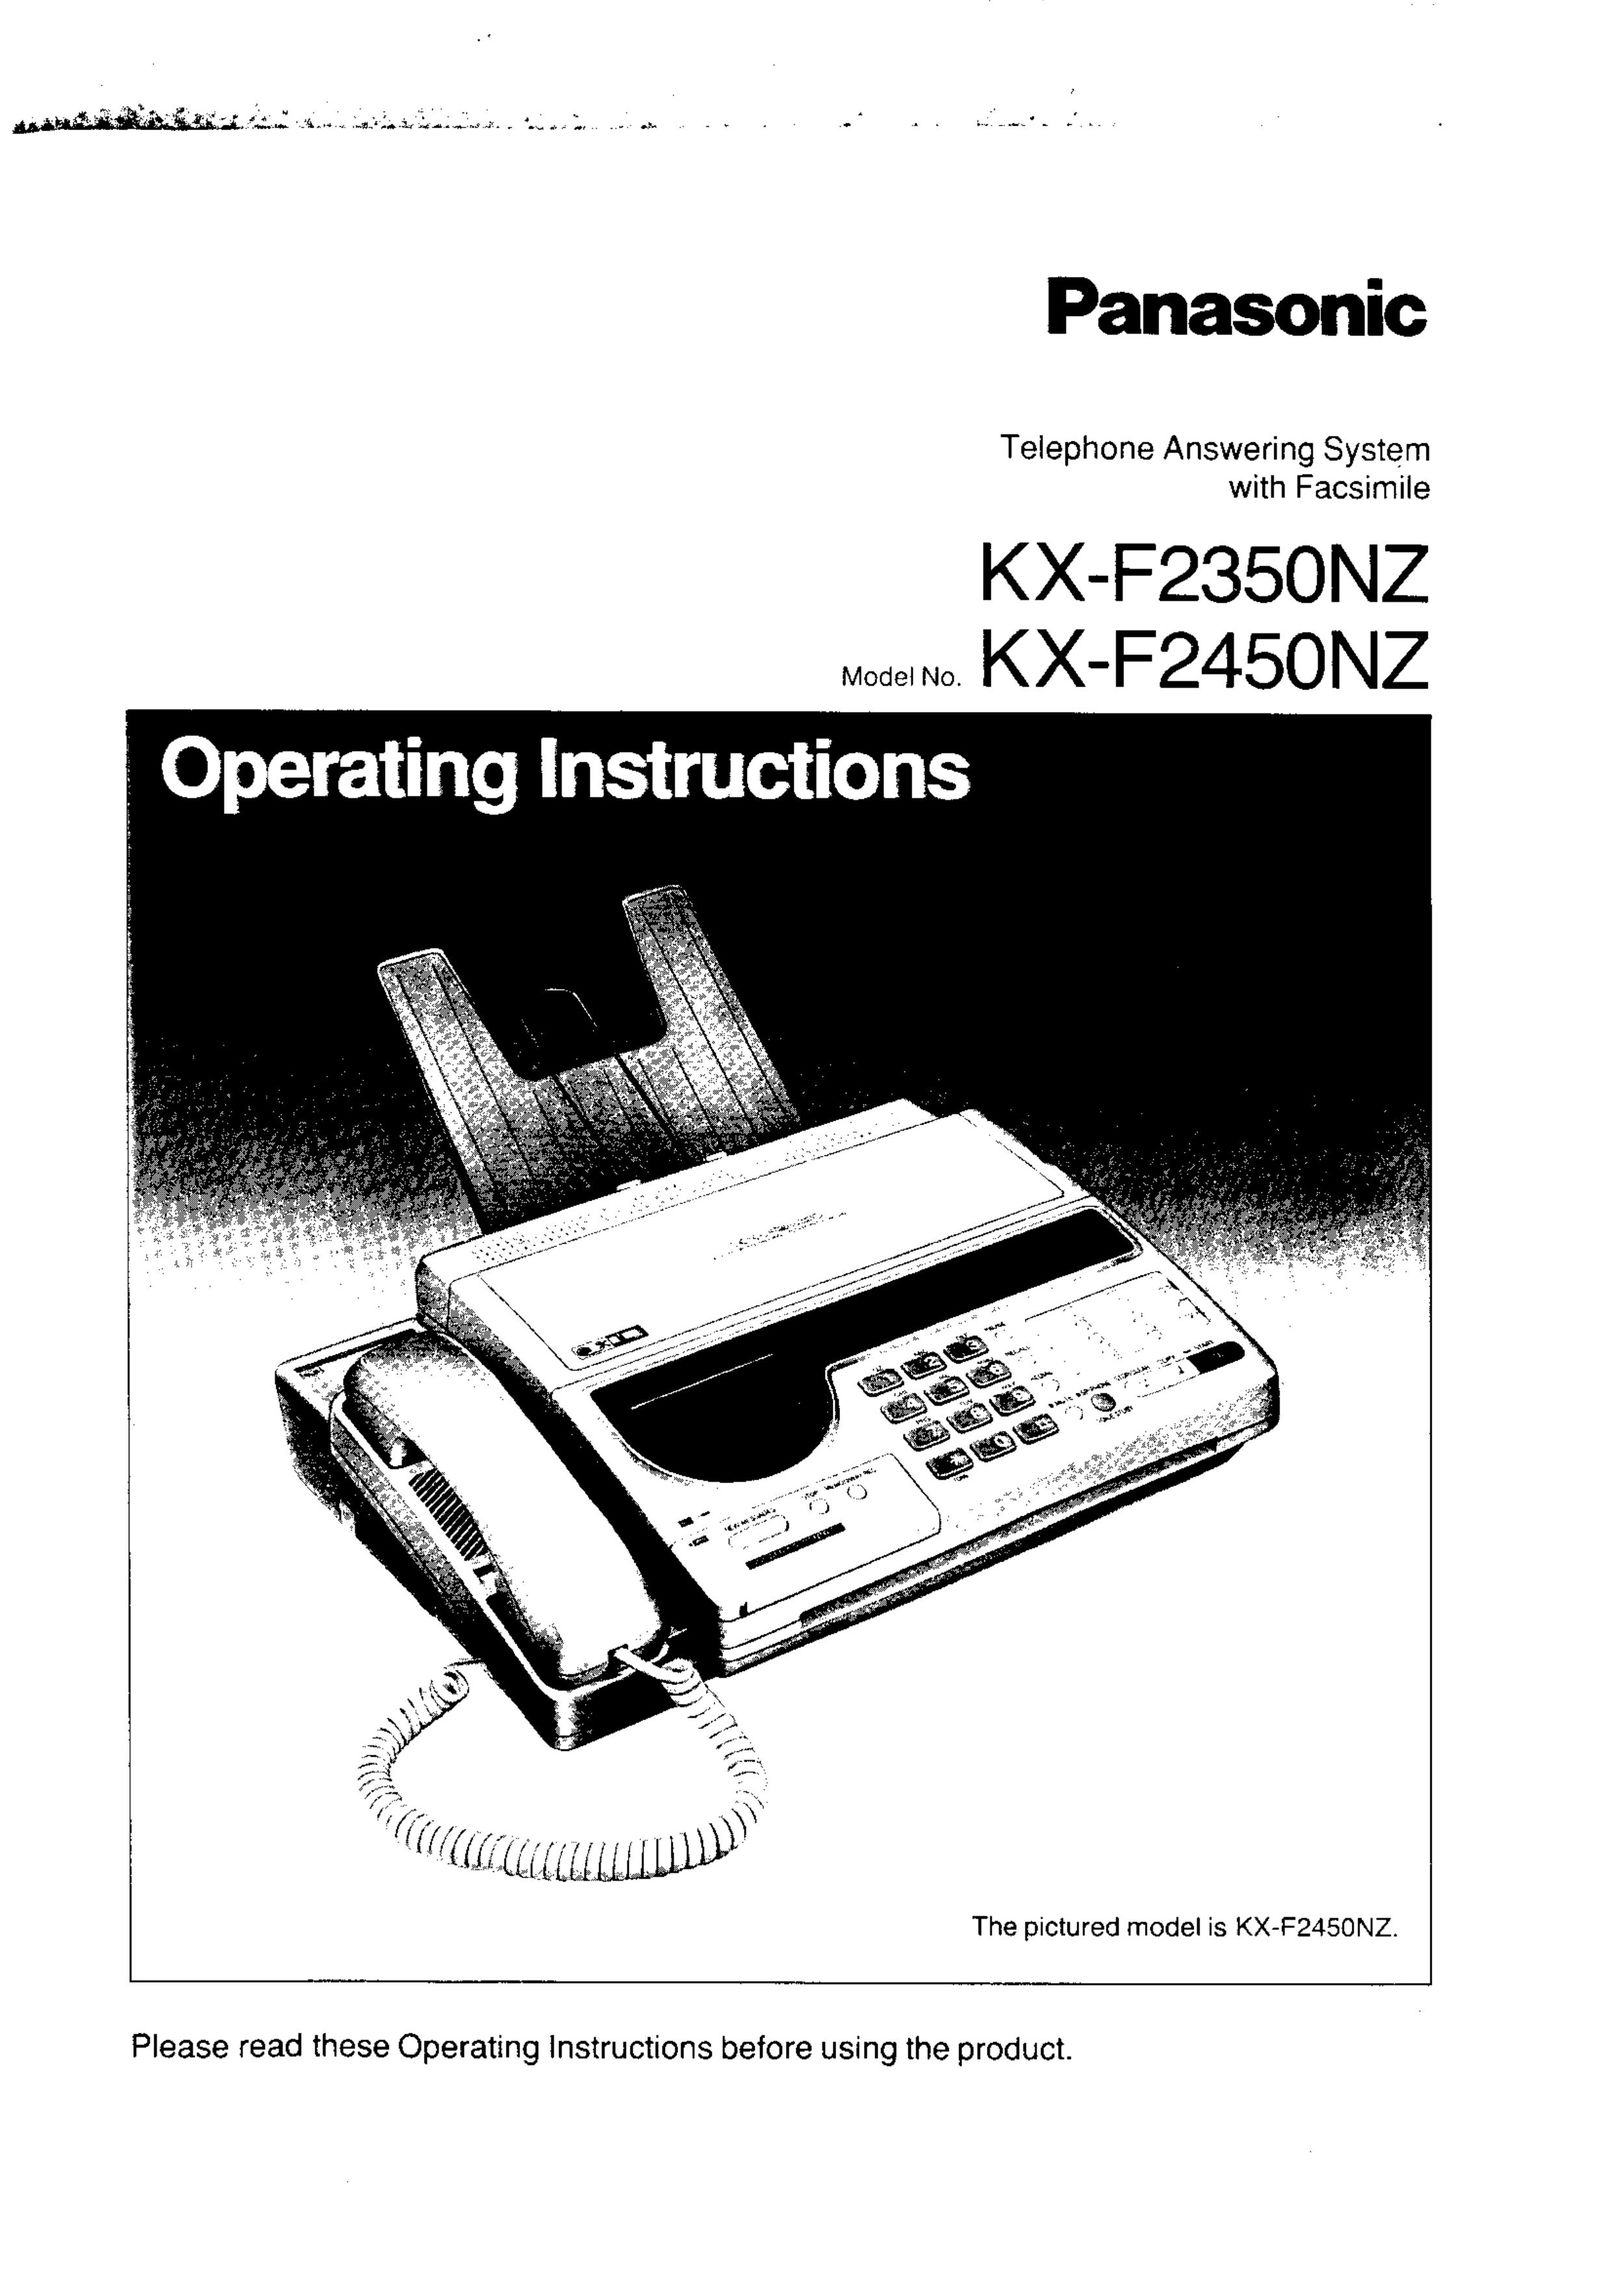 Panasonic KX-F2450NZ Answering Machine User Manual